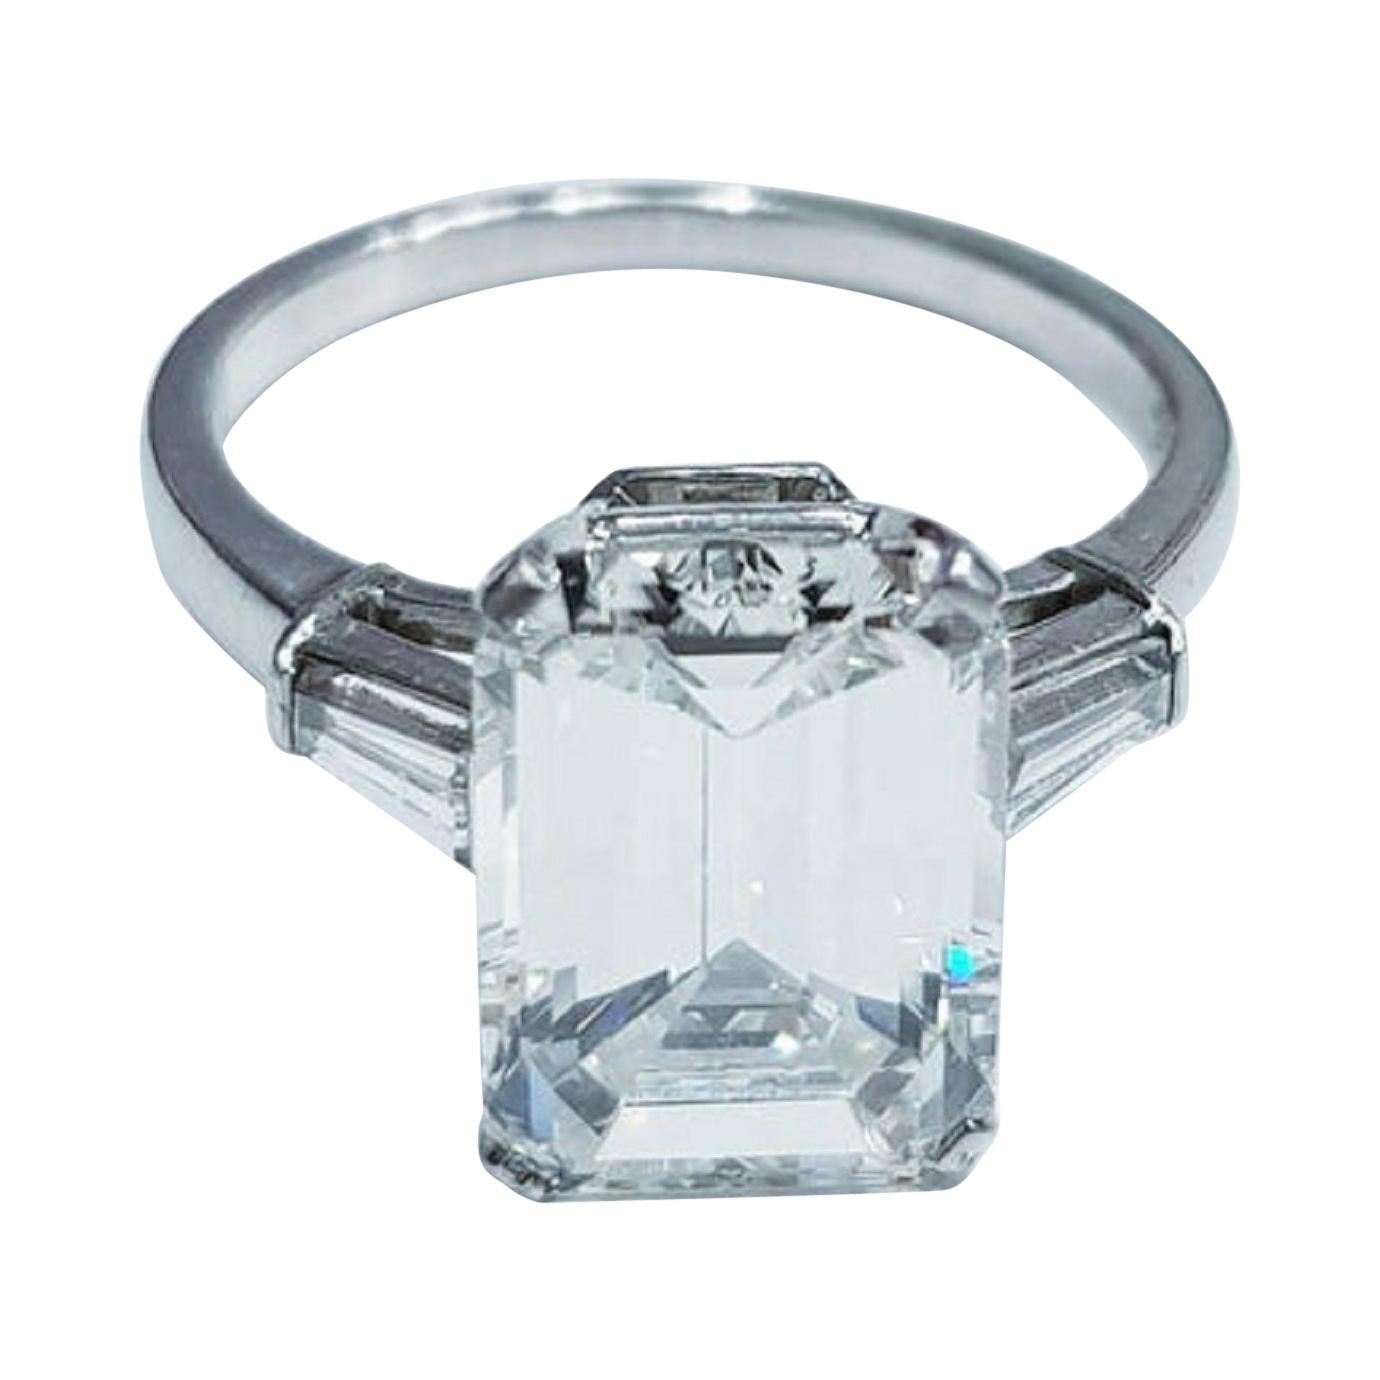 Flawless GIA Certified 4 Carat Emerald Cut Diamond Platinum Ring